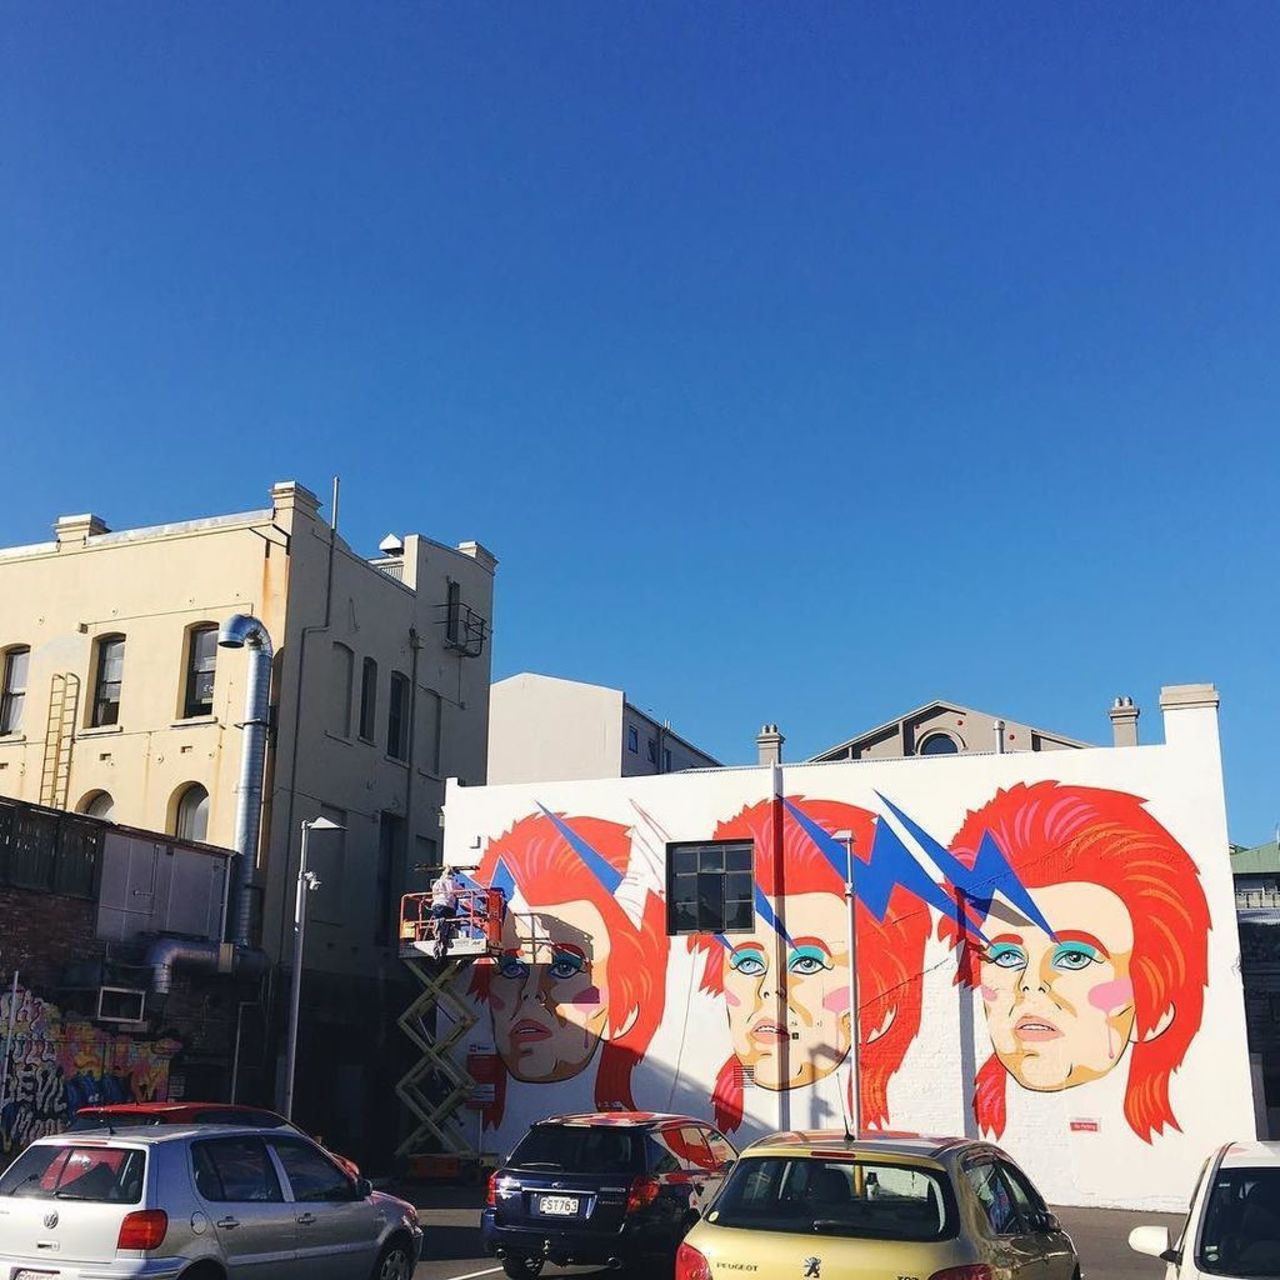 Goodbye Gingerella, hello Bowie #bowie #wallart #streetart #mural #wellington http://ift.tt/2hh3V9i https://t.co/kLXZSUFrav